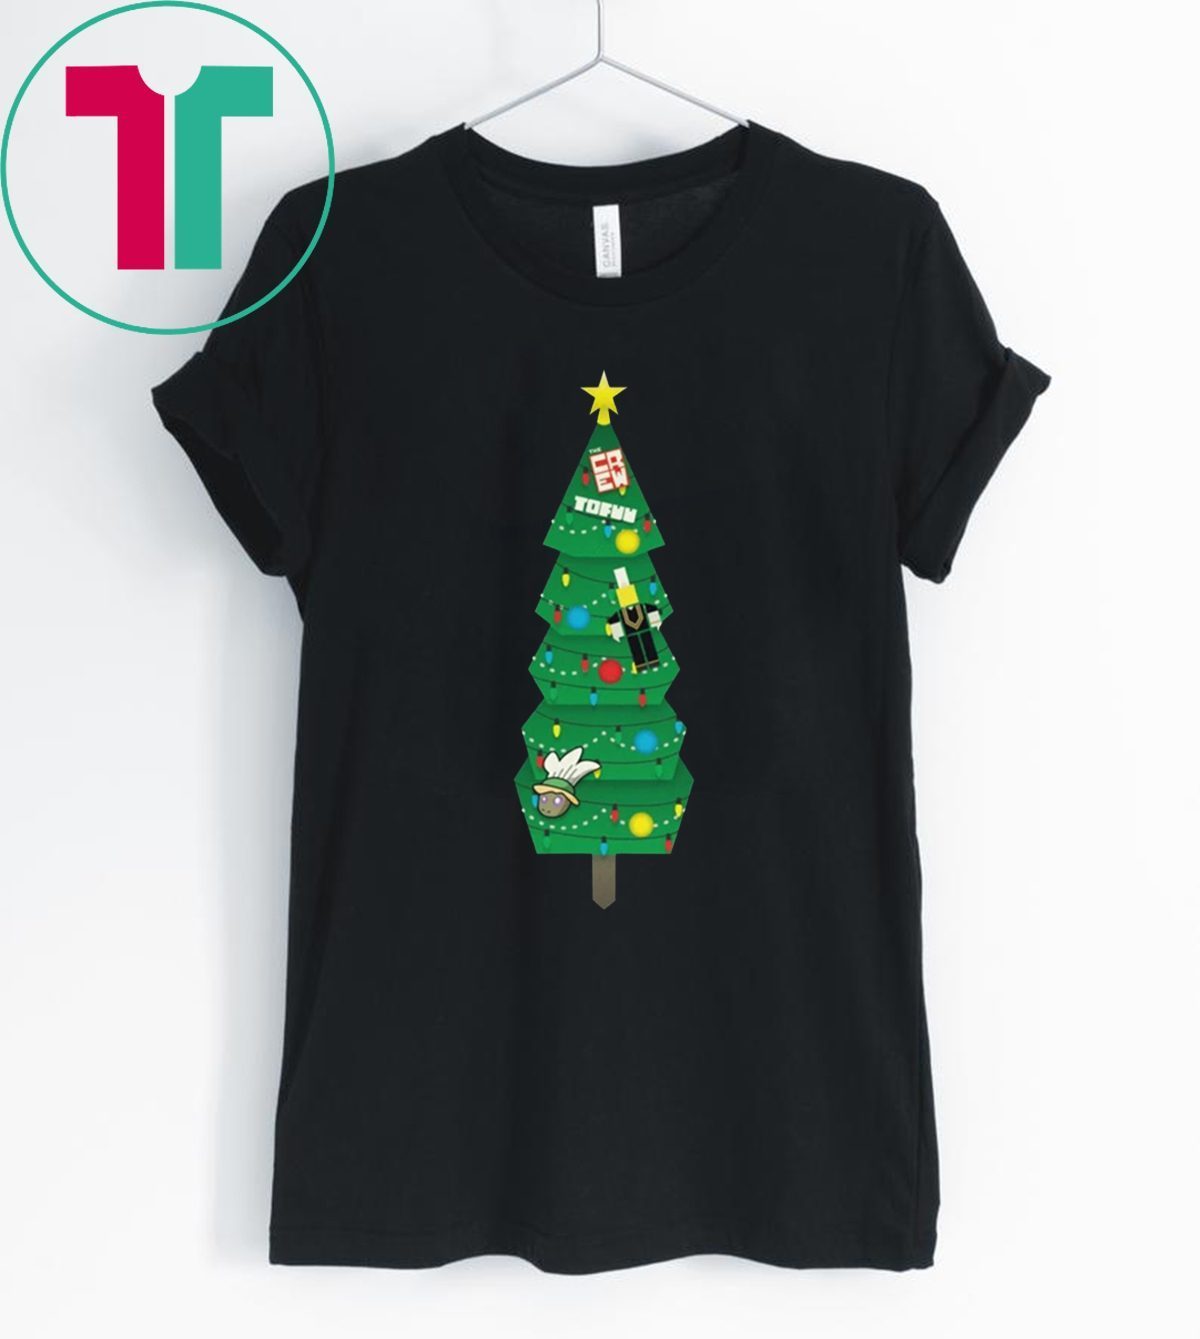 Tofuu Christmas Tree Merch Shirt - Reviewshirts Office